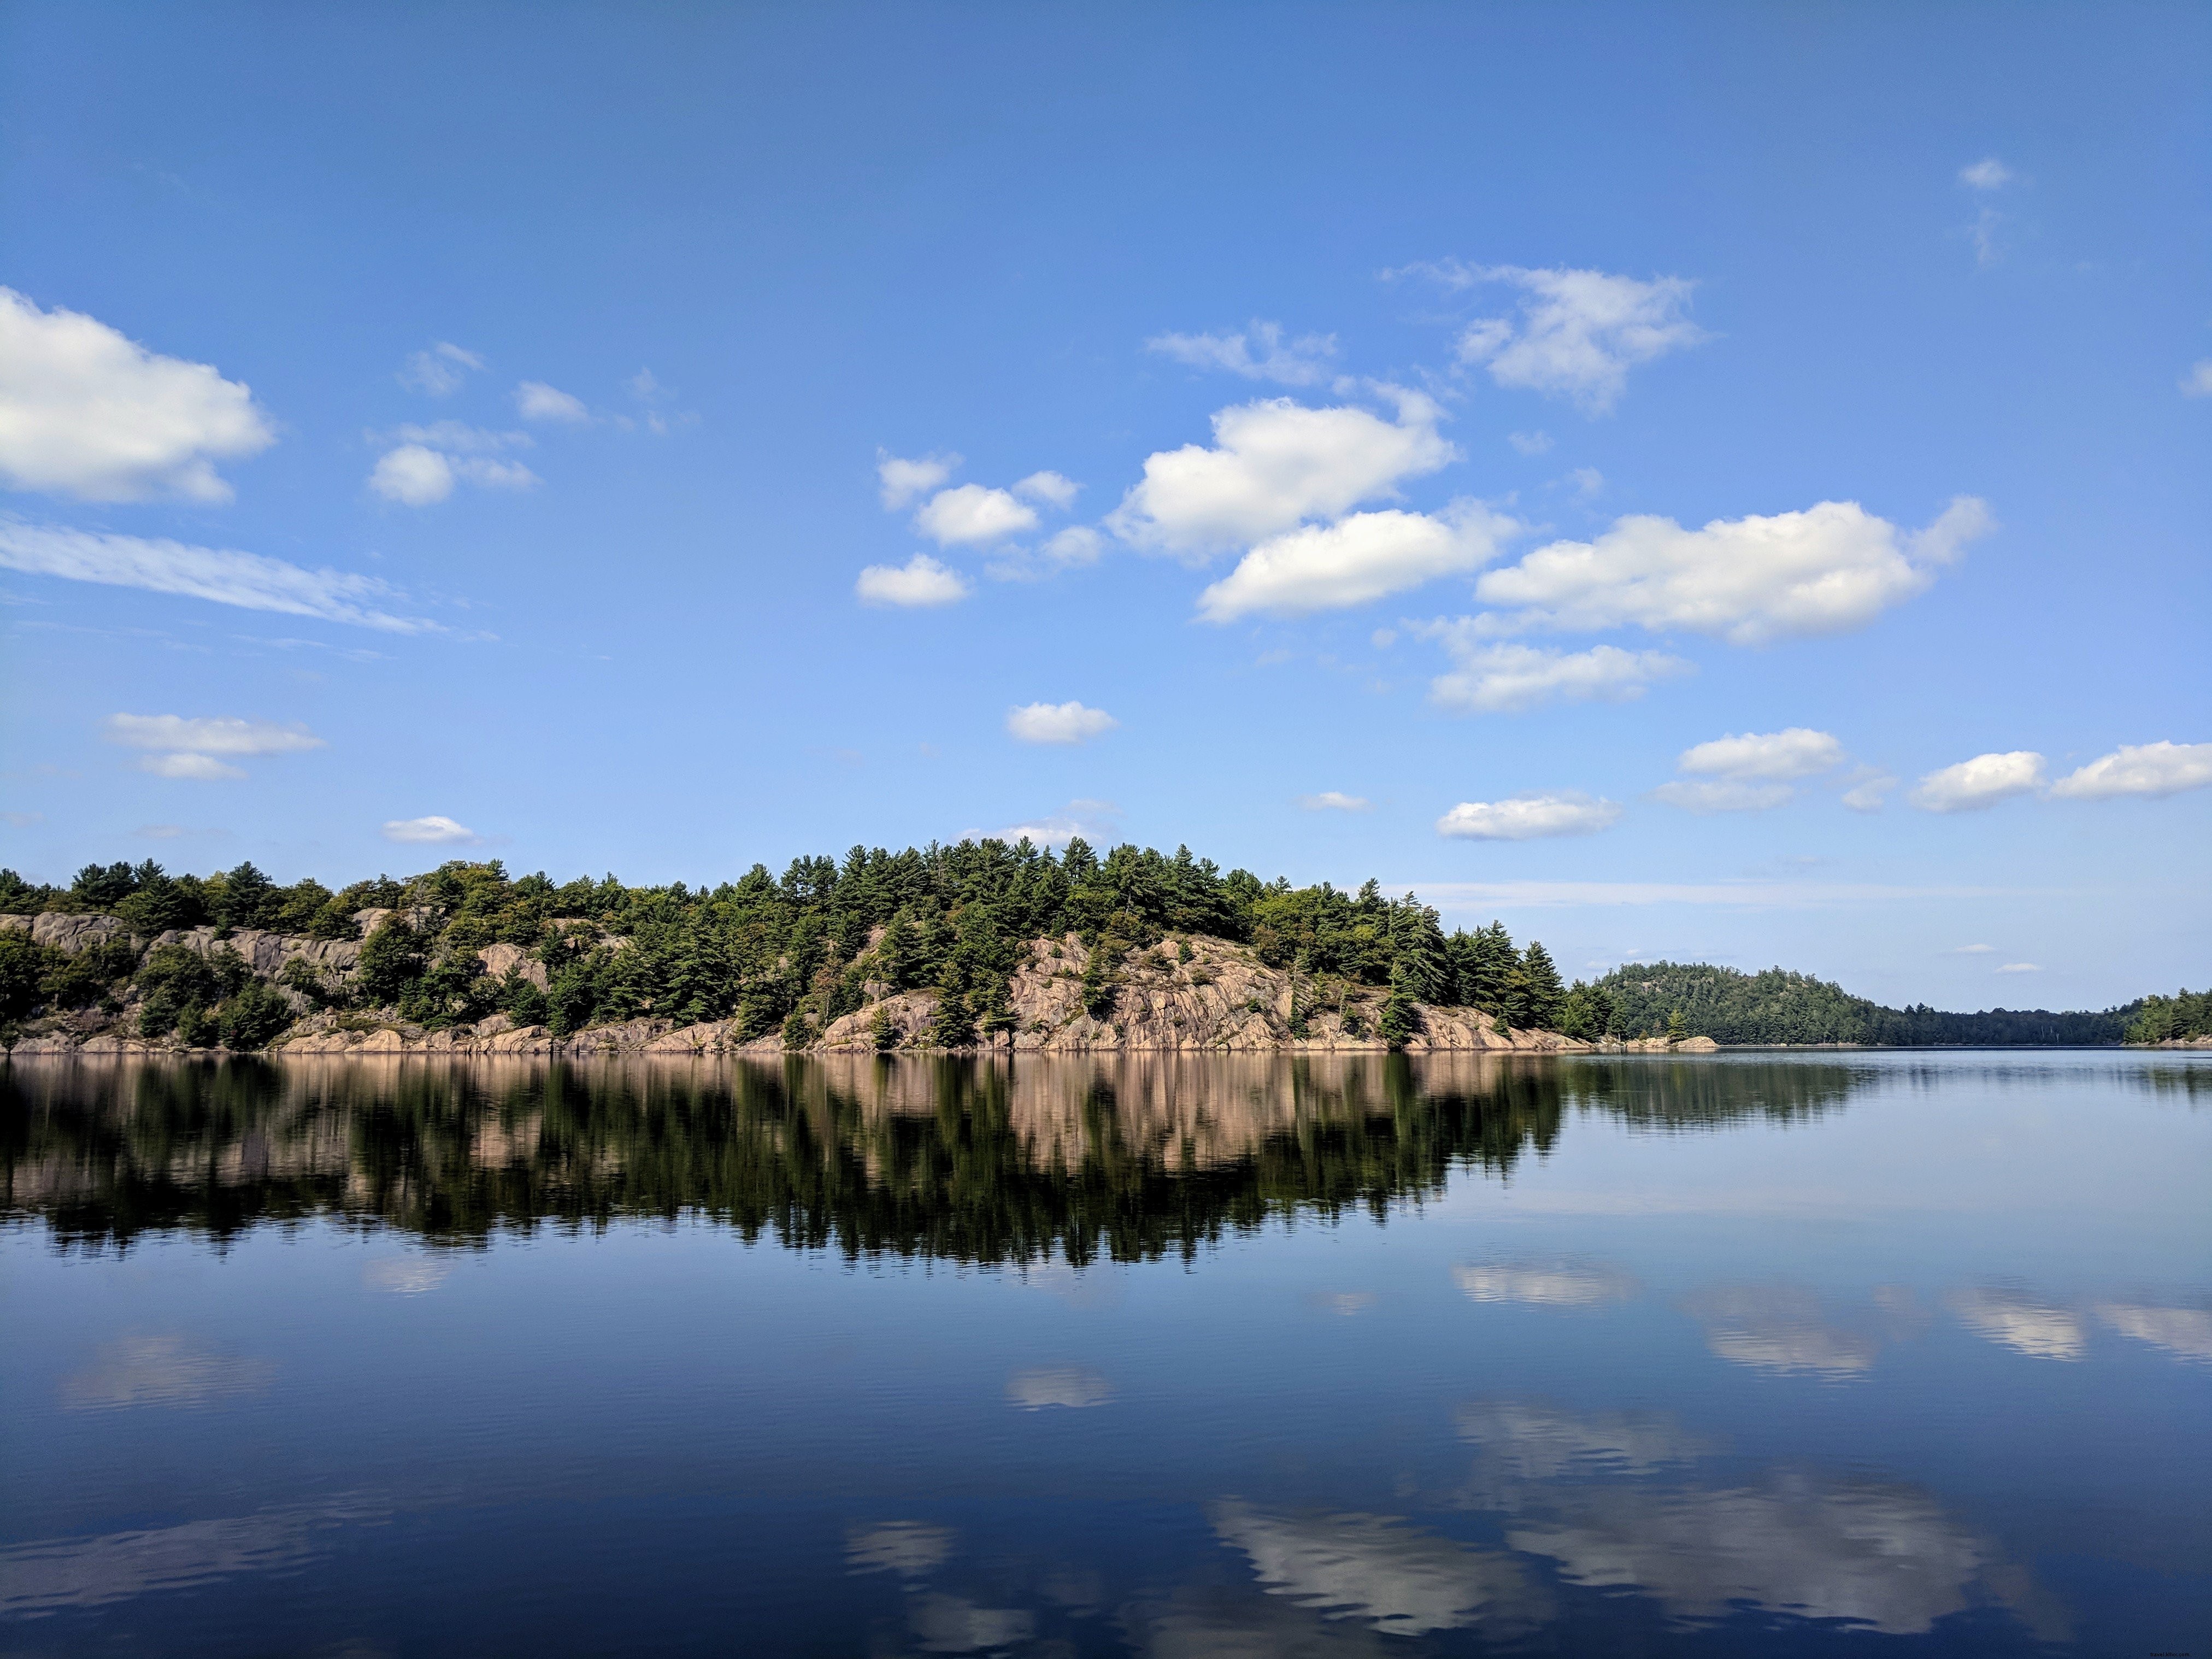 Foto do reflexo de rochas e árvores no lago